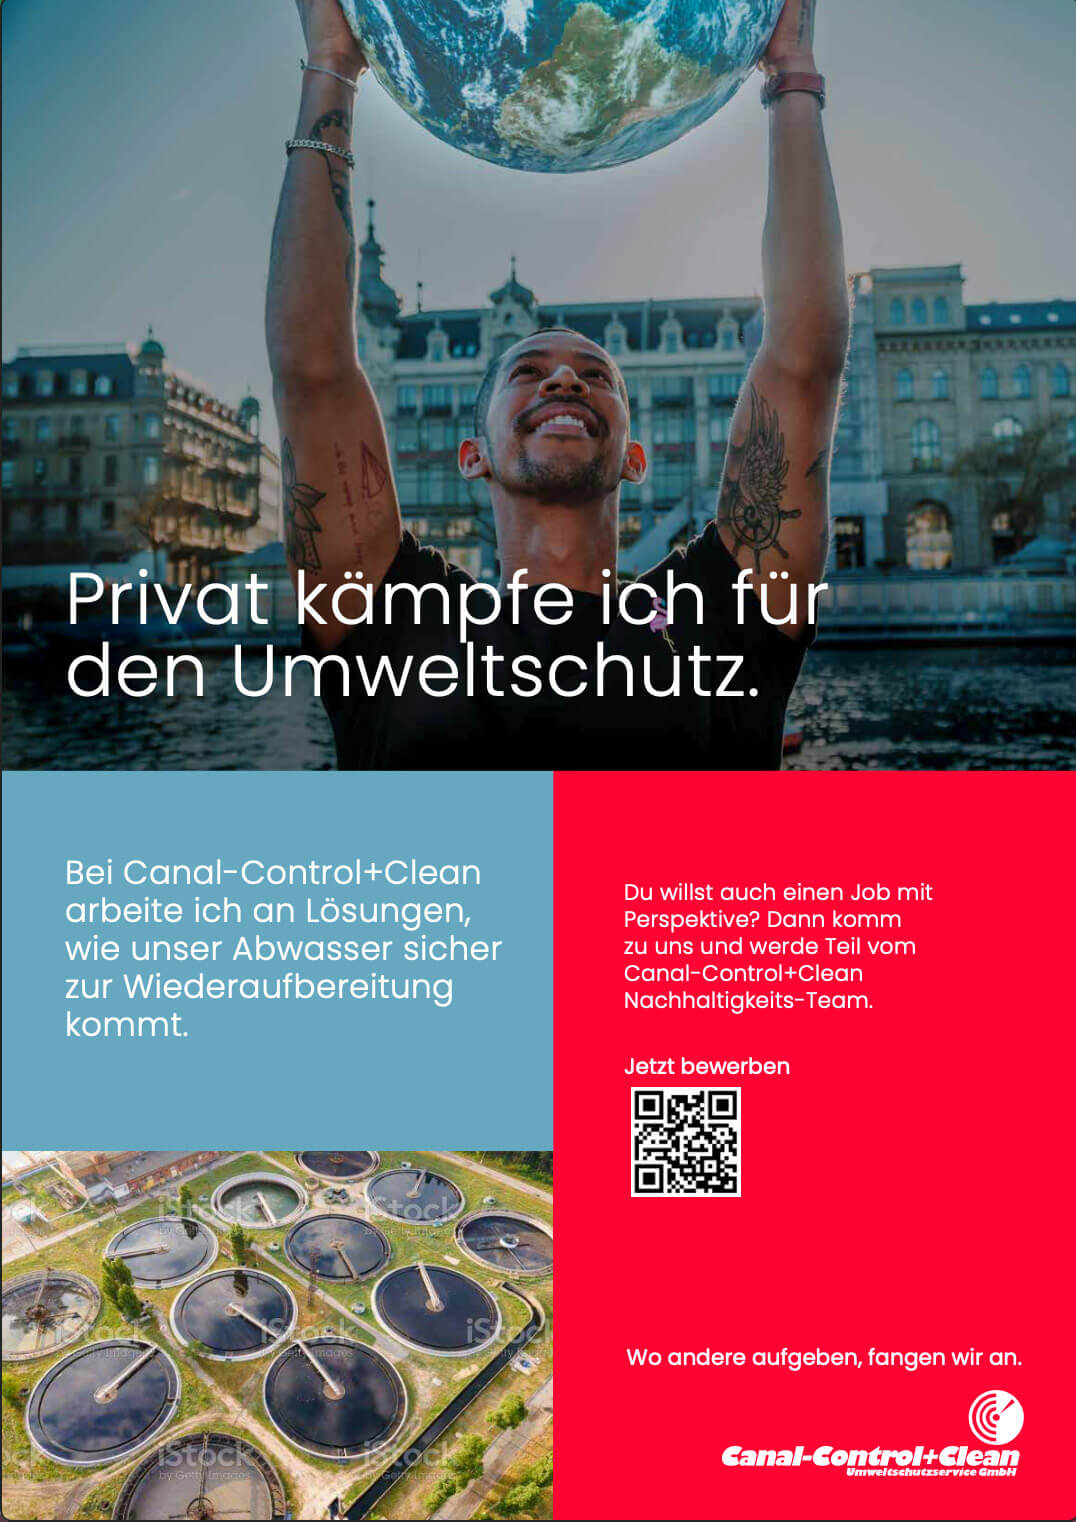 Case - Canal Control + Clean Umweltschutzservice GmbH - NOW Brand Mentoring